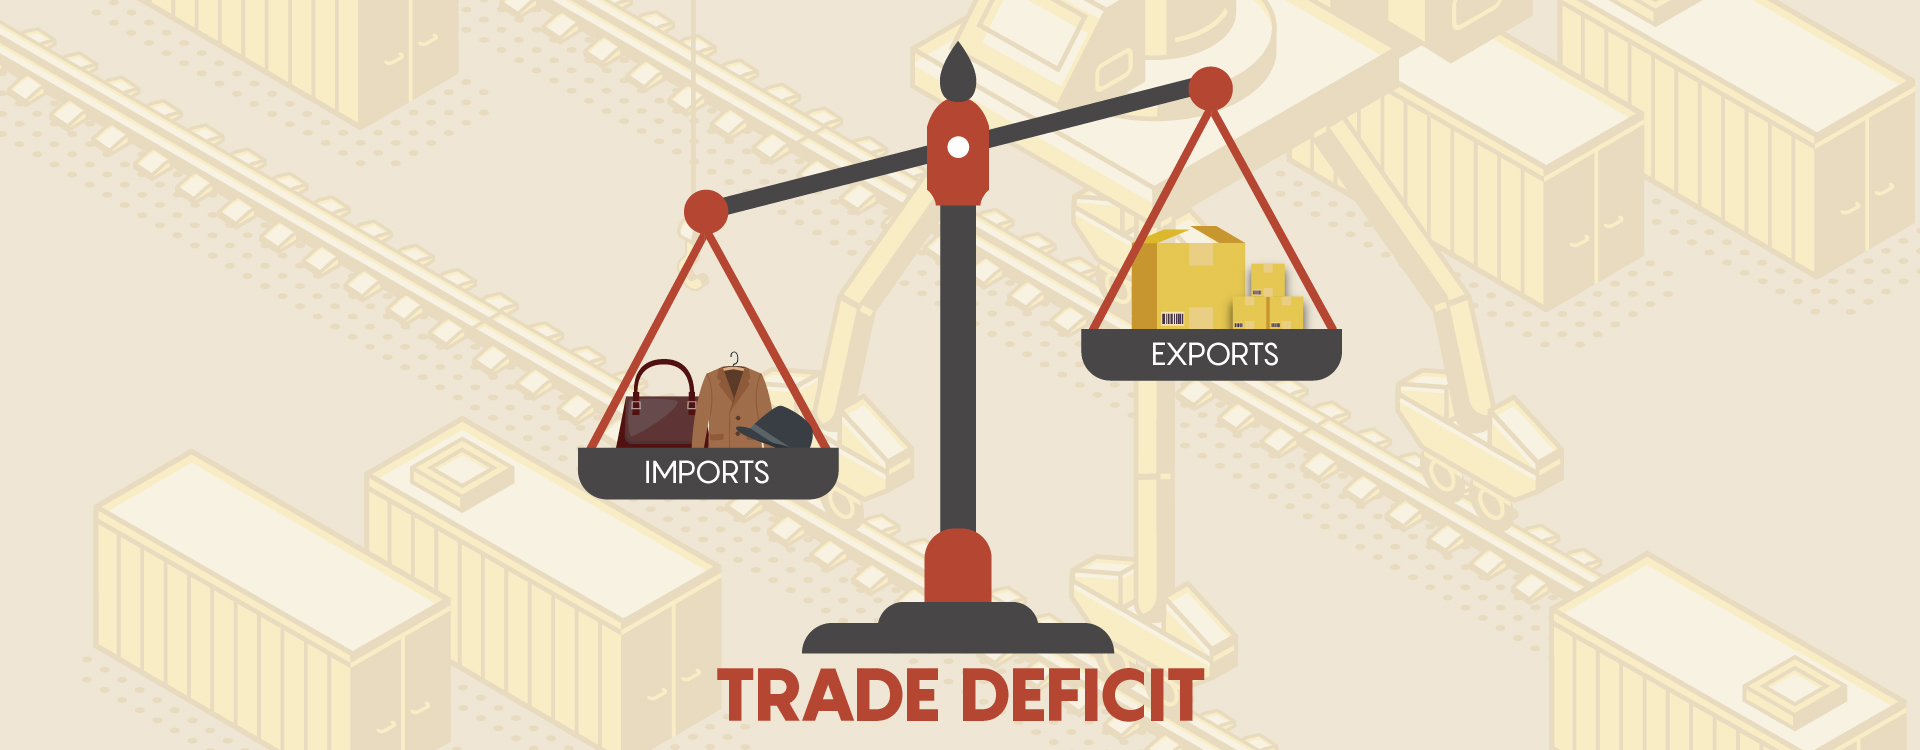 trade deficit là gì